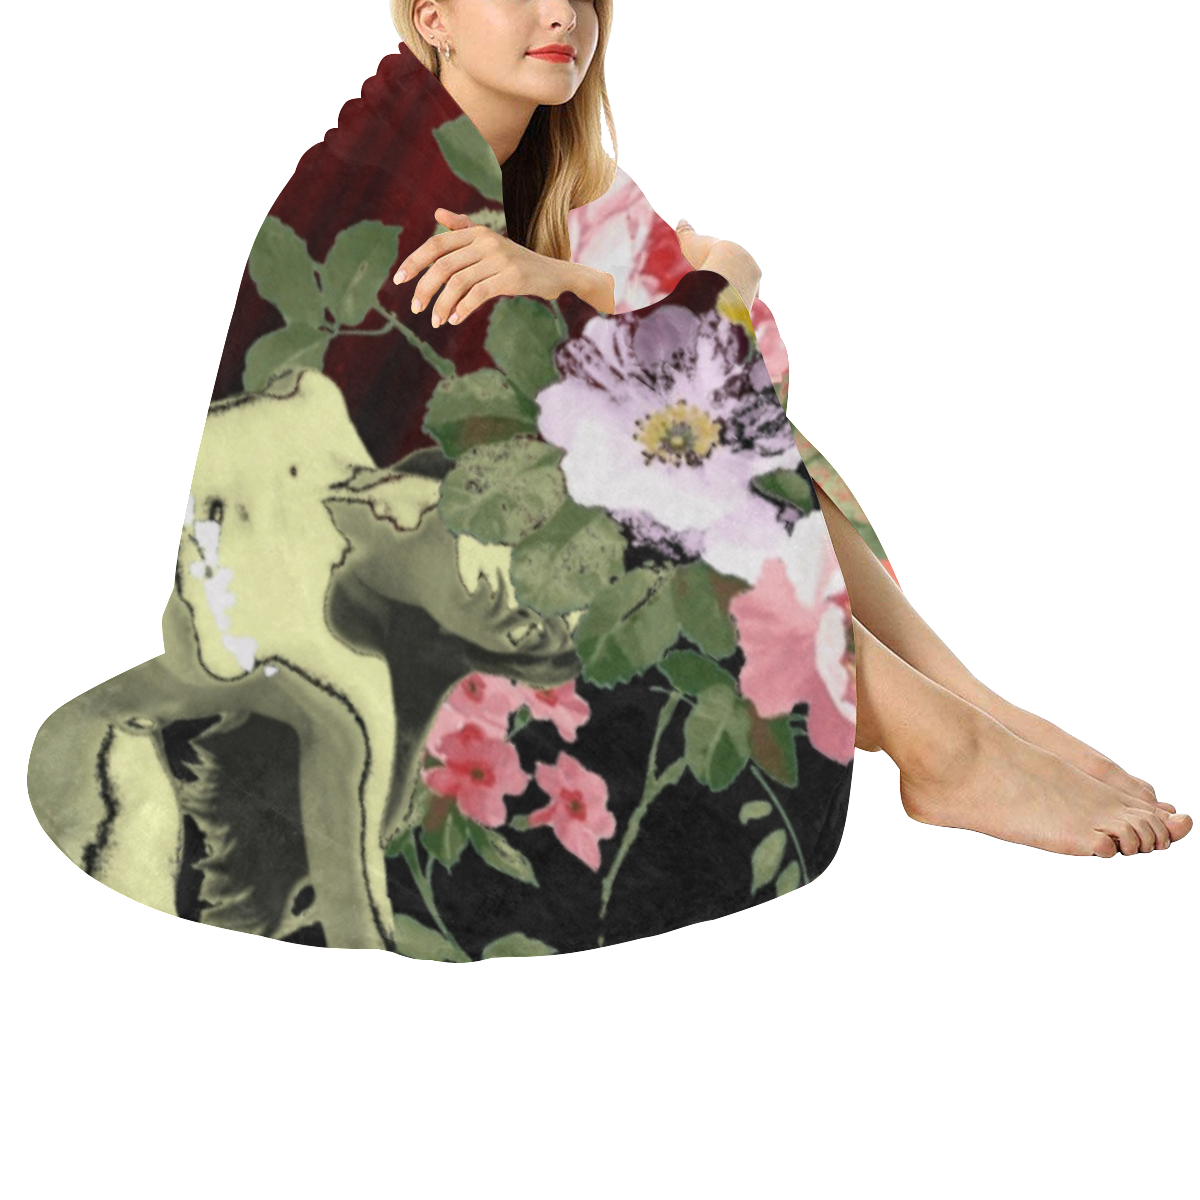 Flora Rainbow Circular Ultra-Soft Micro Fleece Blanket 60"